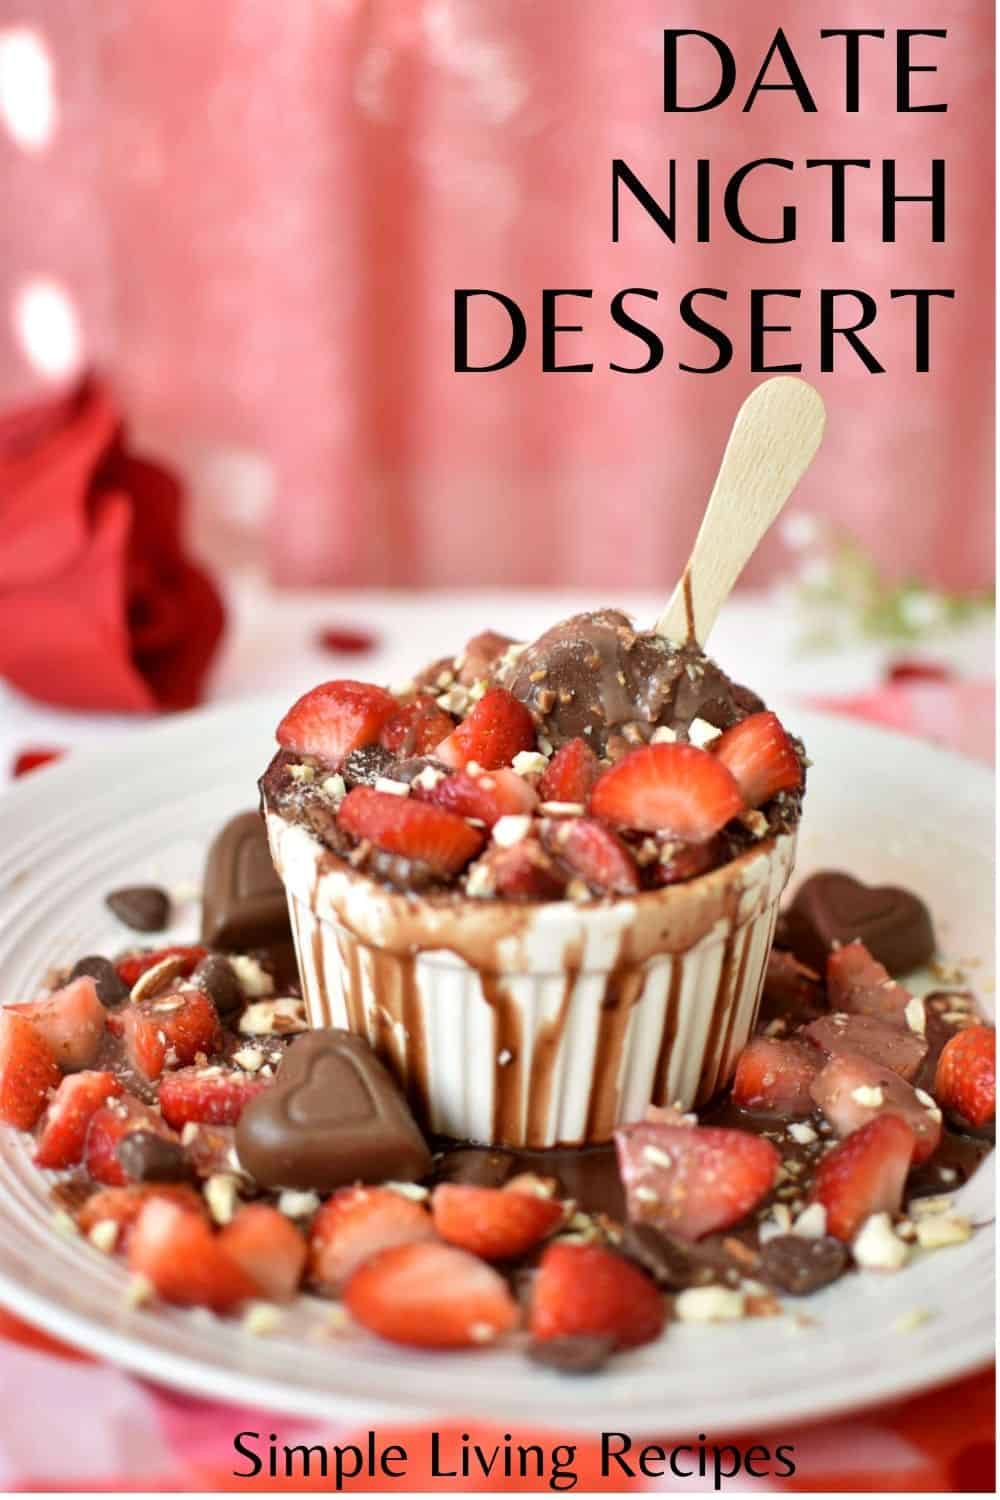 Date Night dessert recipe Pin for Pinterest